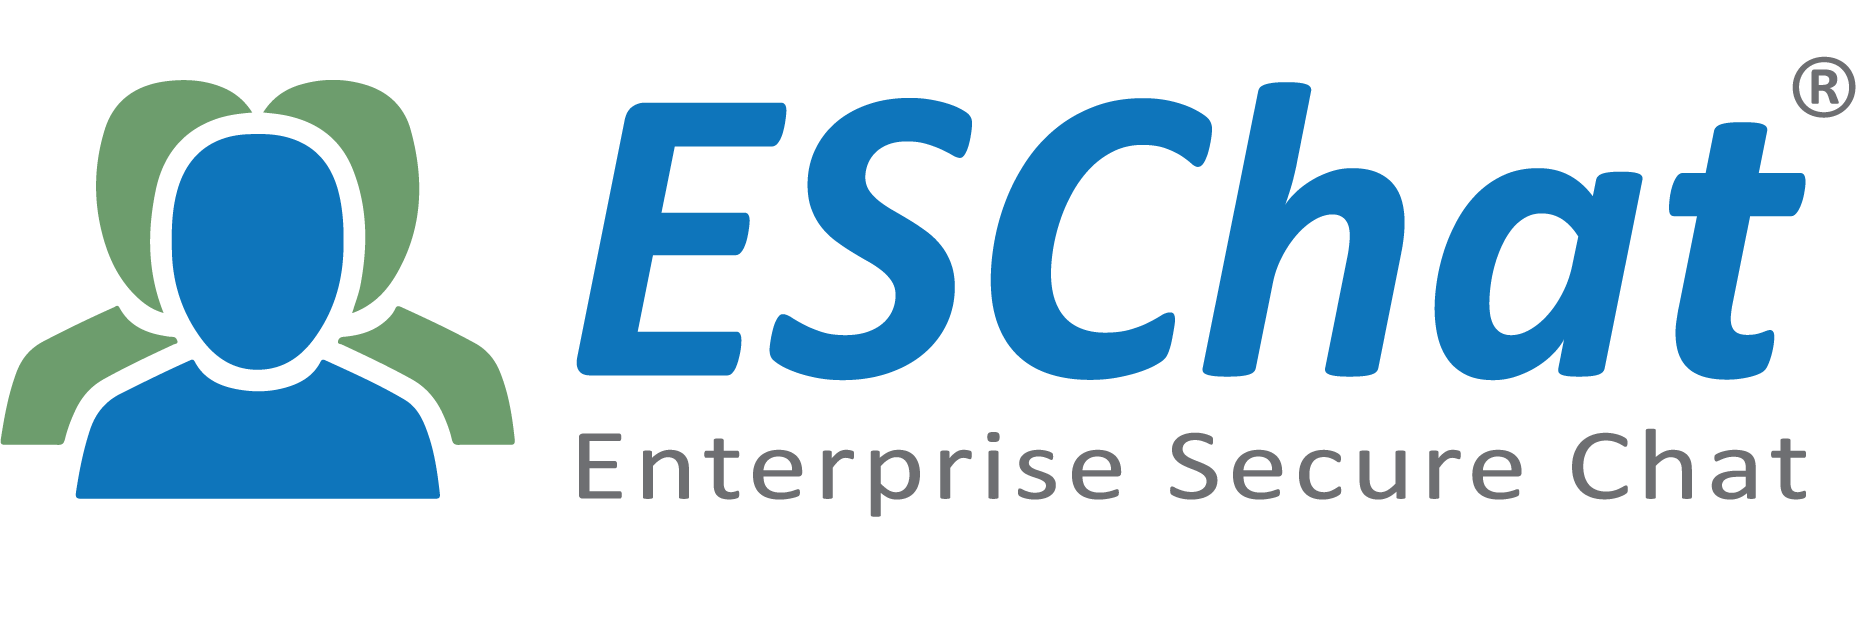 ESChat Logo colored